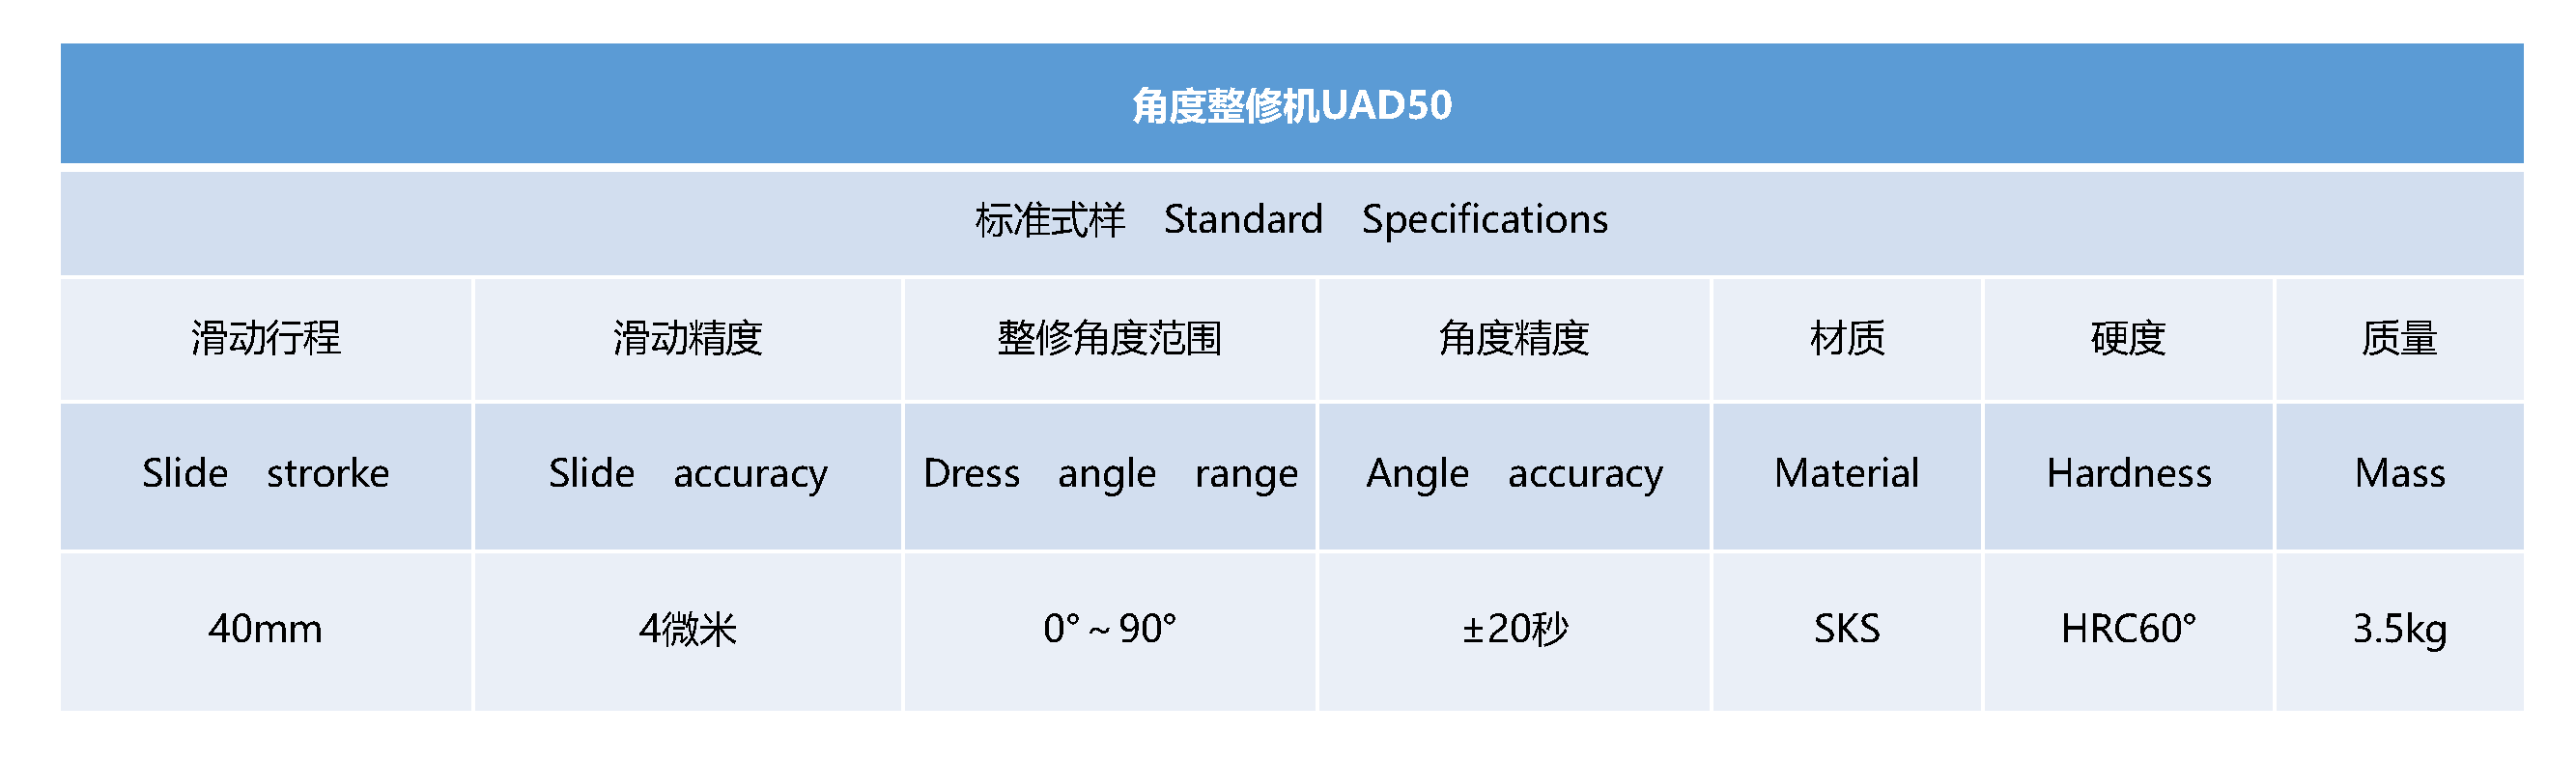 UAD50_精度表 - 中文.png